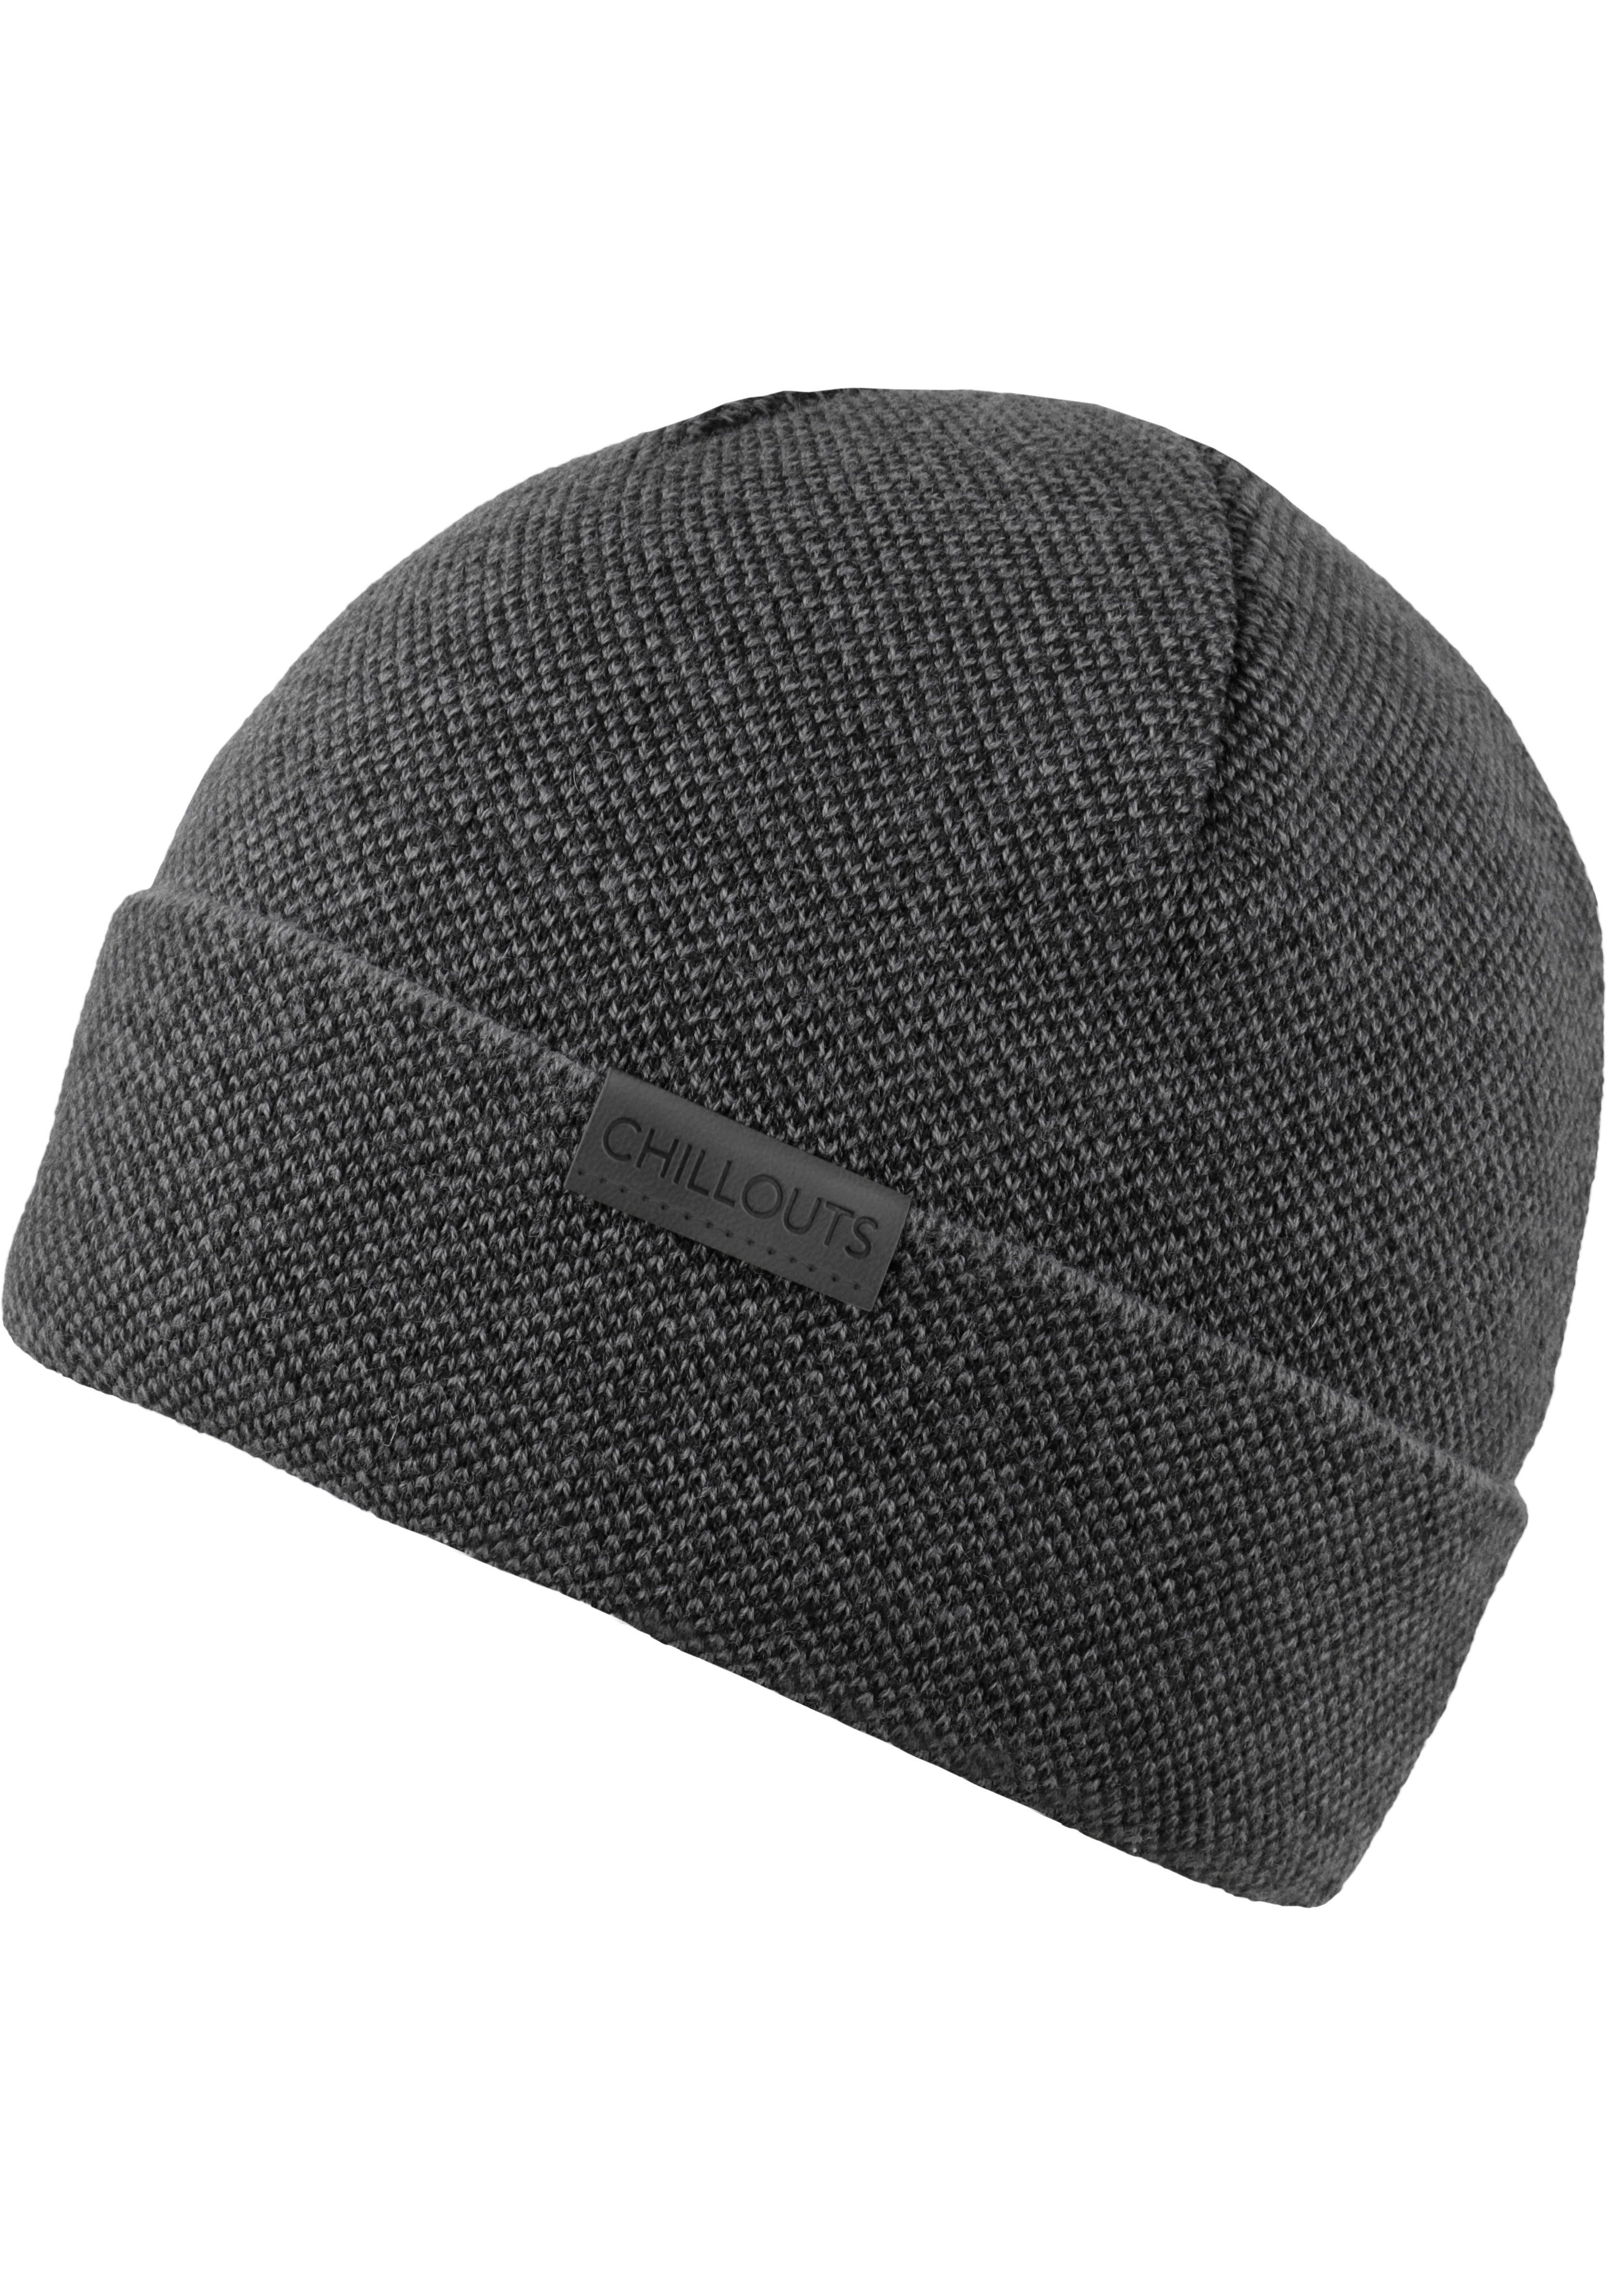 Strickmütze Kilian grey chillouts Hat dark